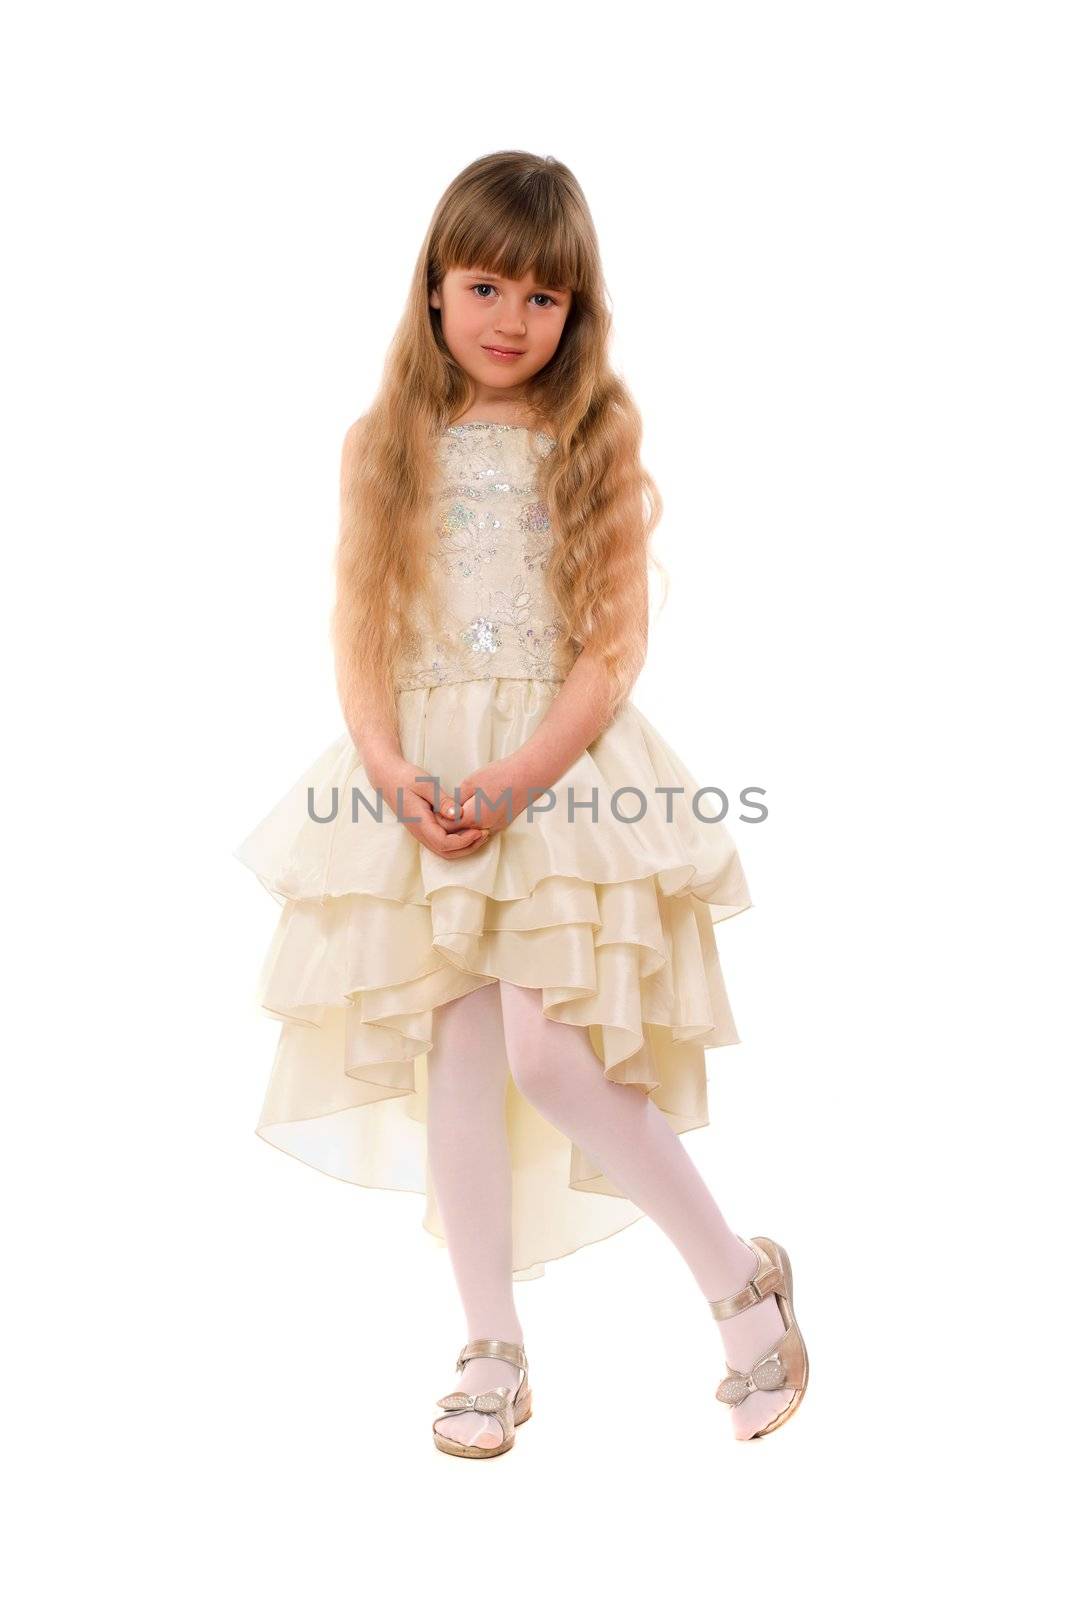 Cute little girl in a beige dress. Isolated